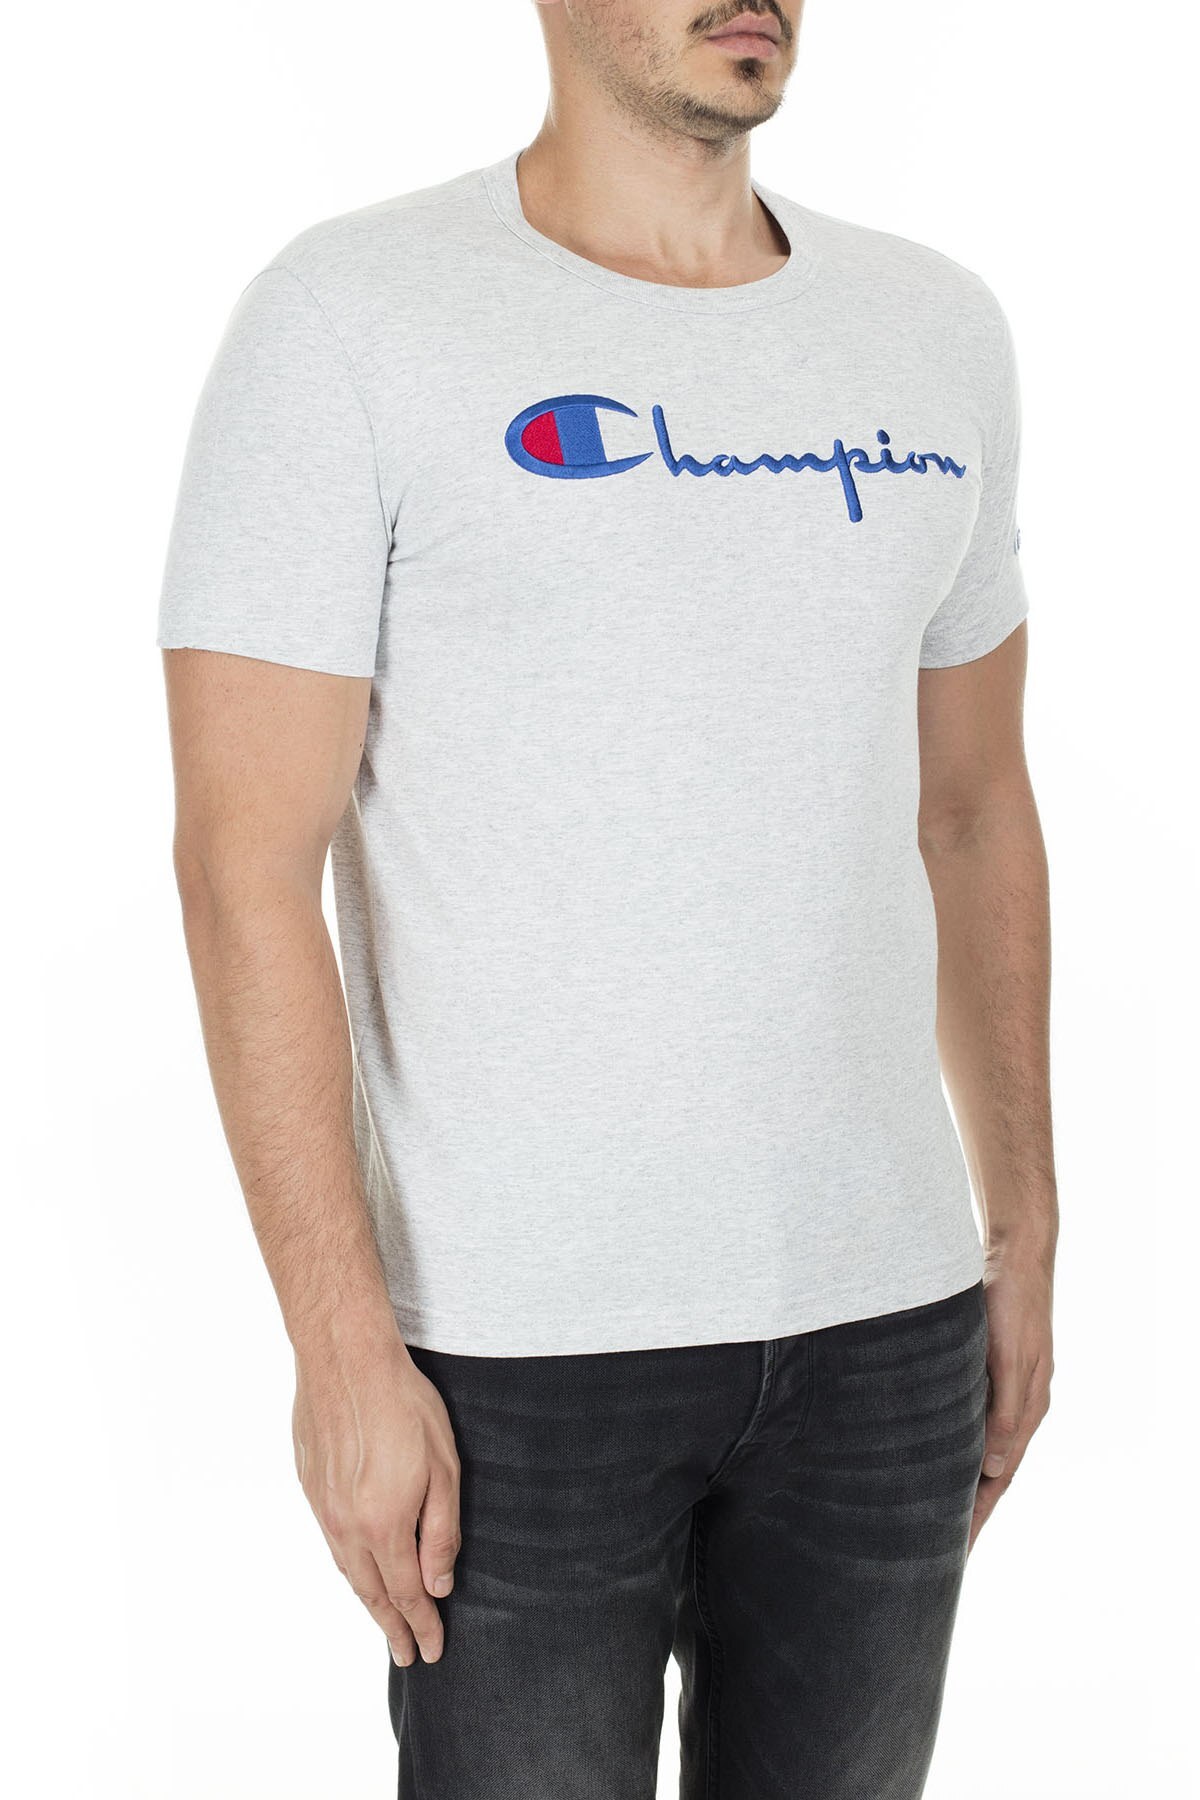 Champion İşlemeli Yazı Logolu Bisiklet Yaka Erkek T Shirt 210972 EM004 LOXGM AÇIK GRİ